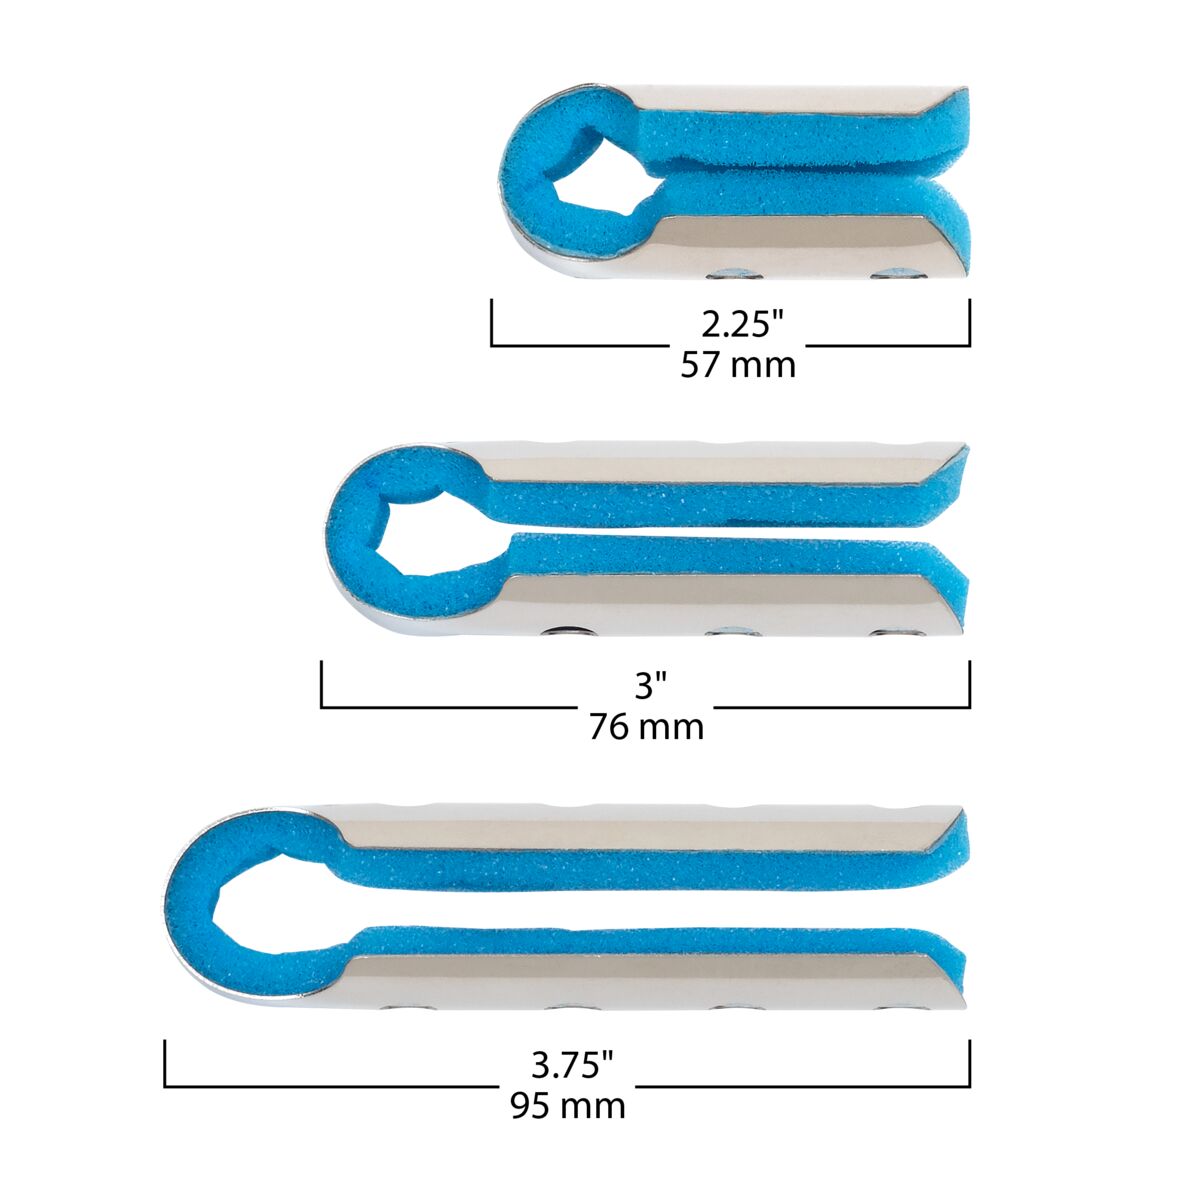 Finger splint value pack includes 3 different sized finger splints